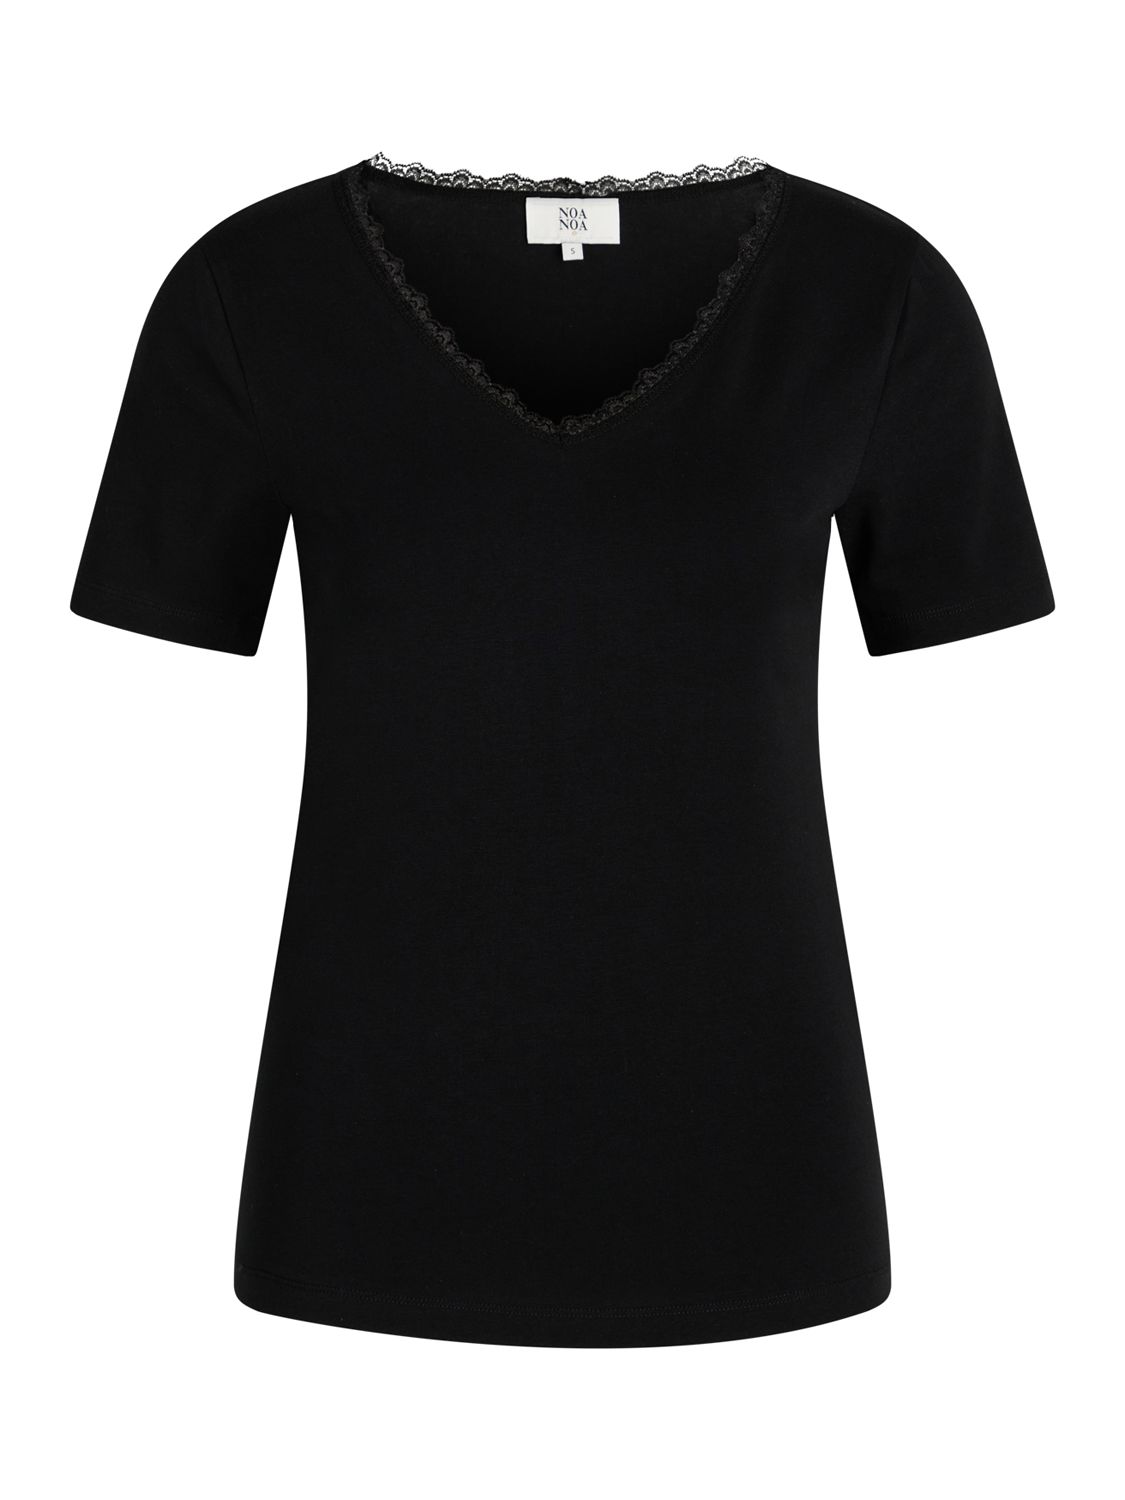 Noa Noa Lyda T-Shirt, Black at John Lewis & Partners